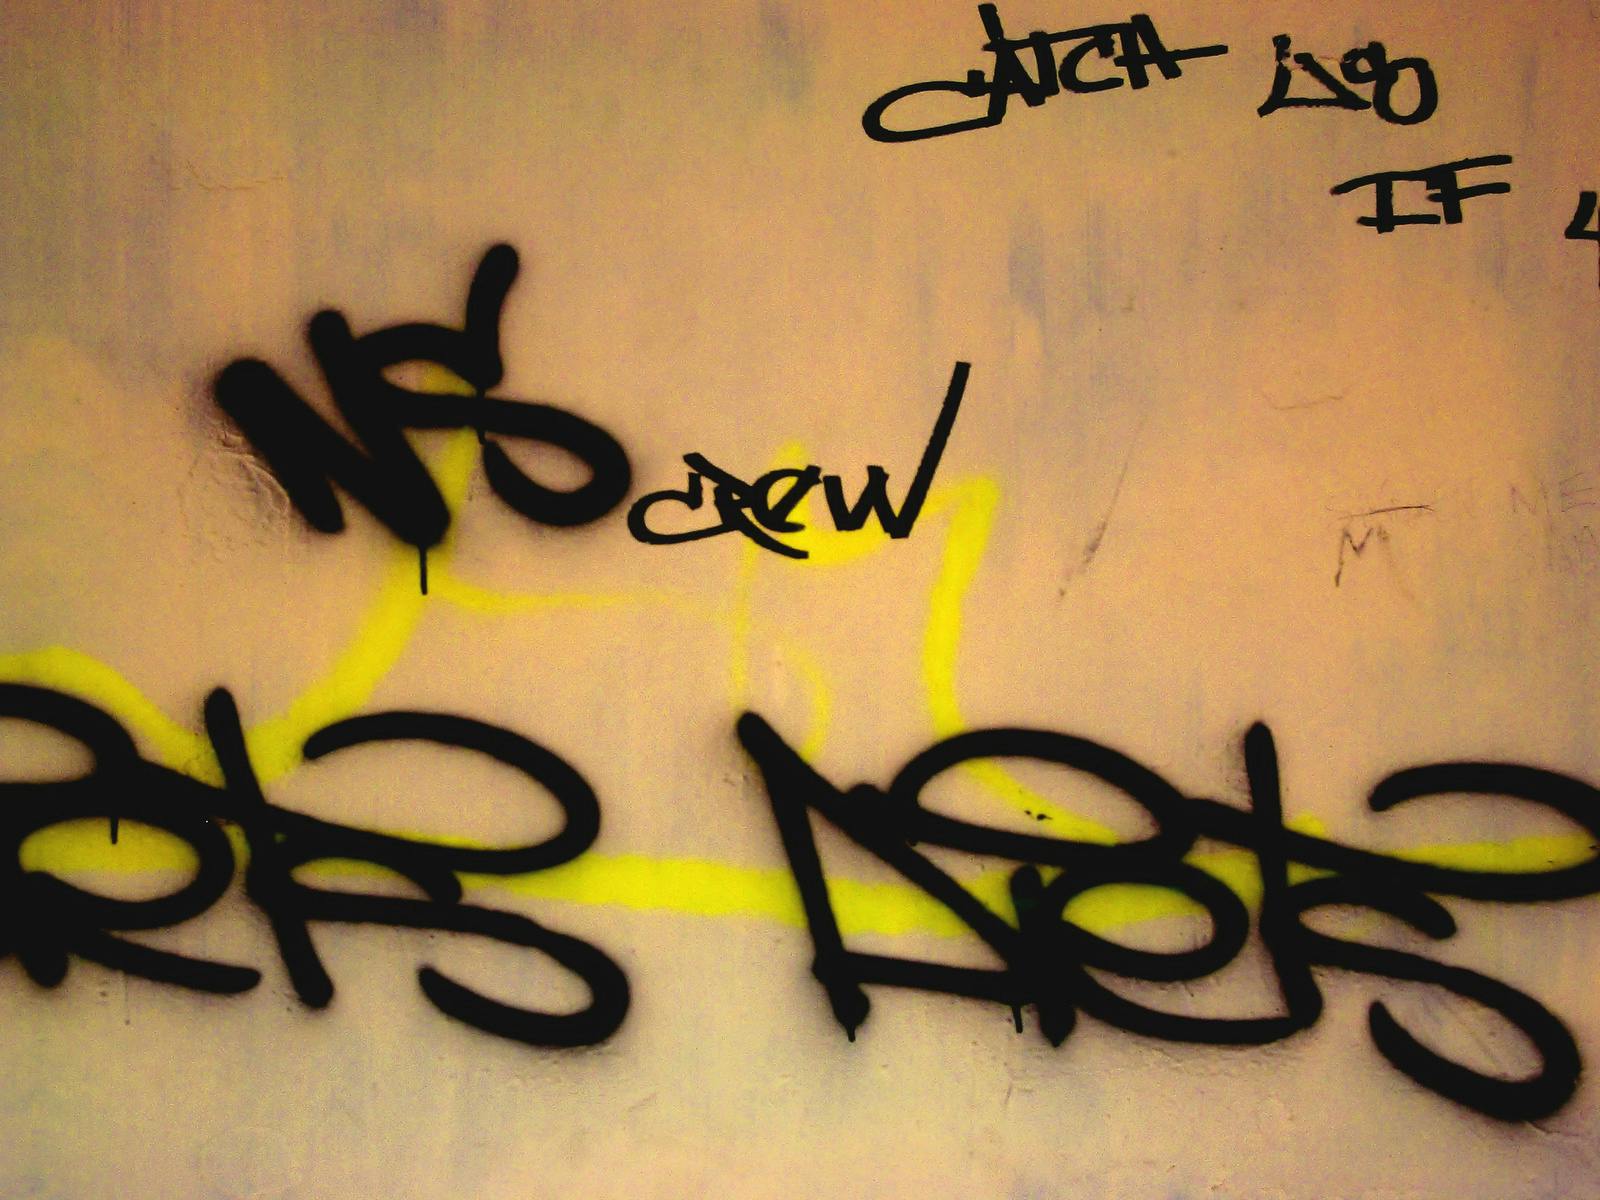 Graffiti on the wall 